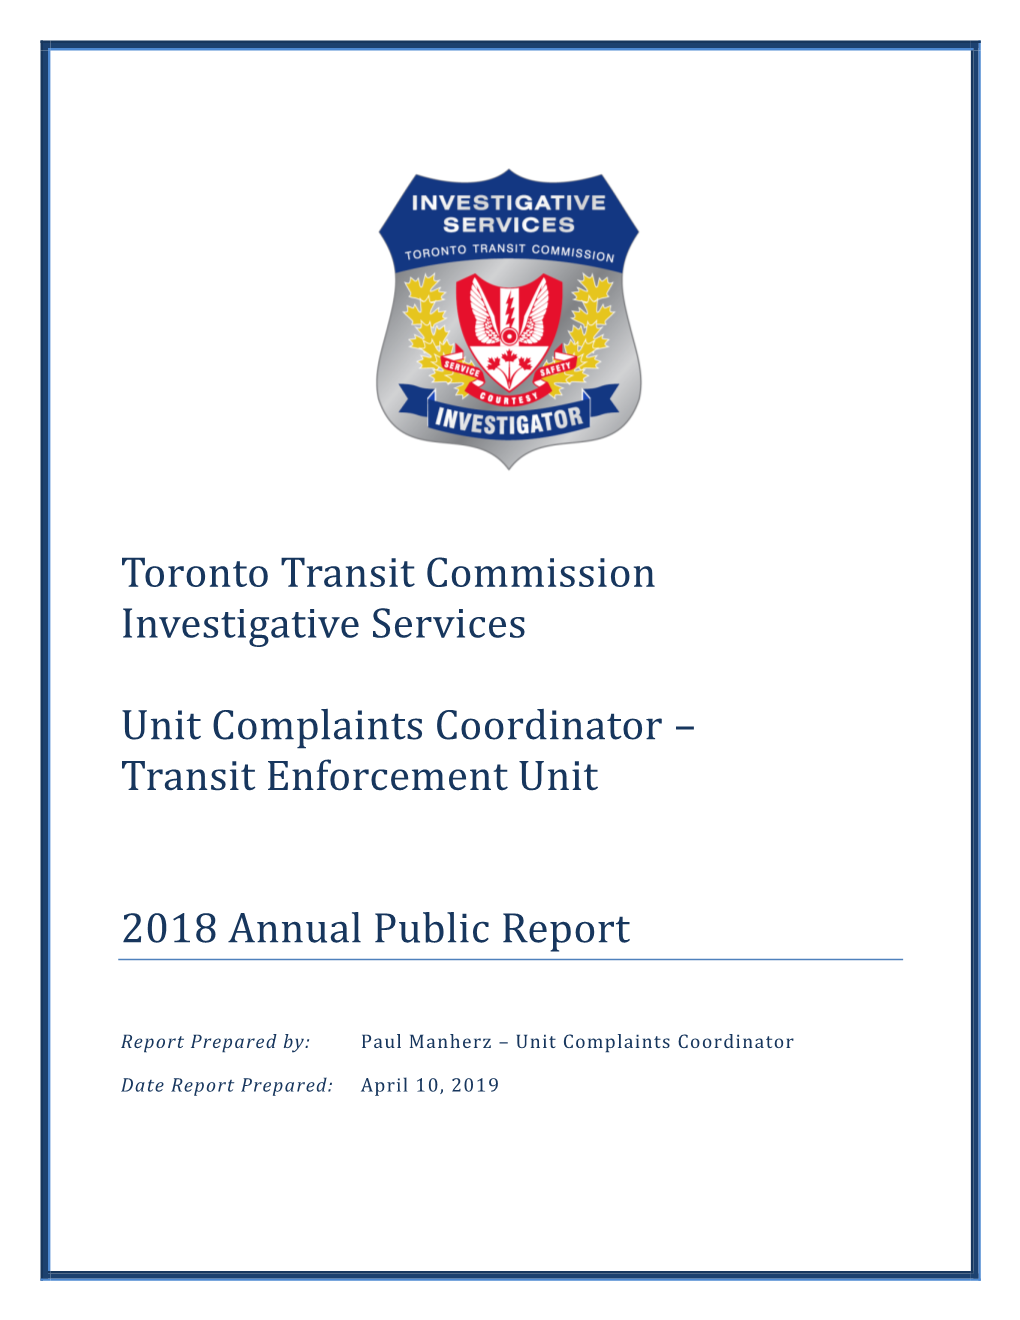 Toronto Transit Commission Investigative Services Unit